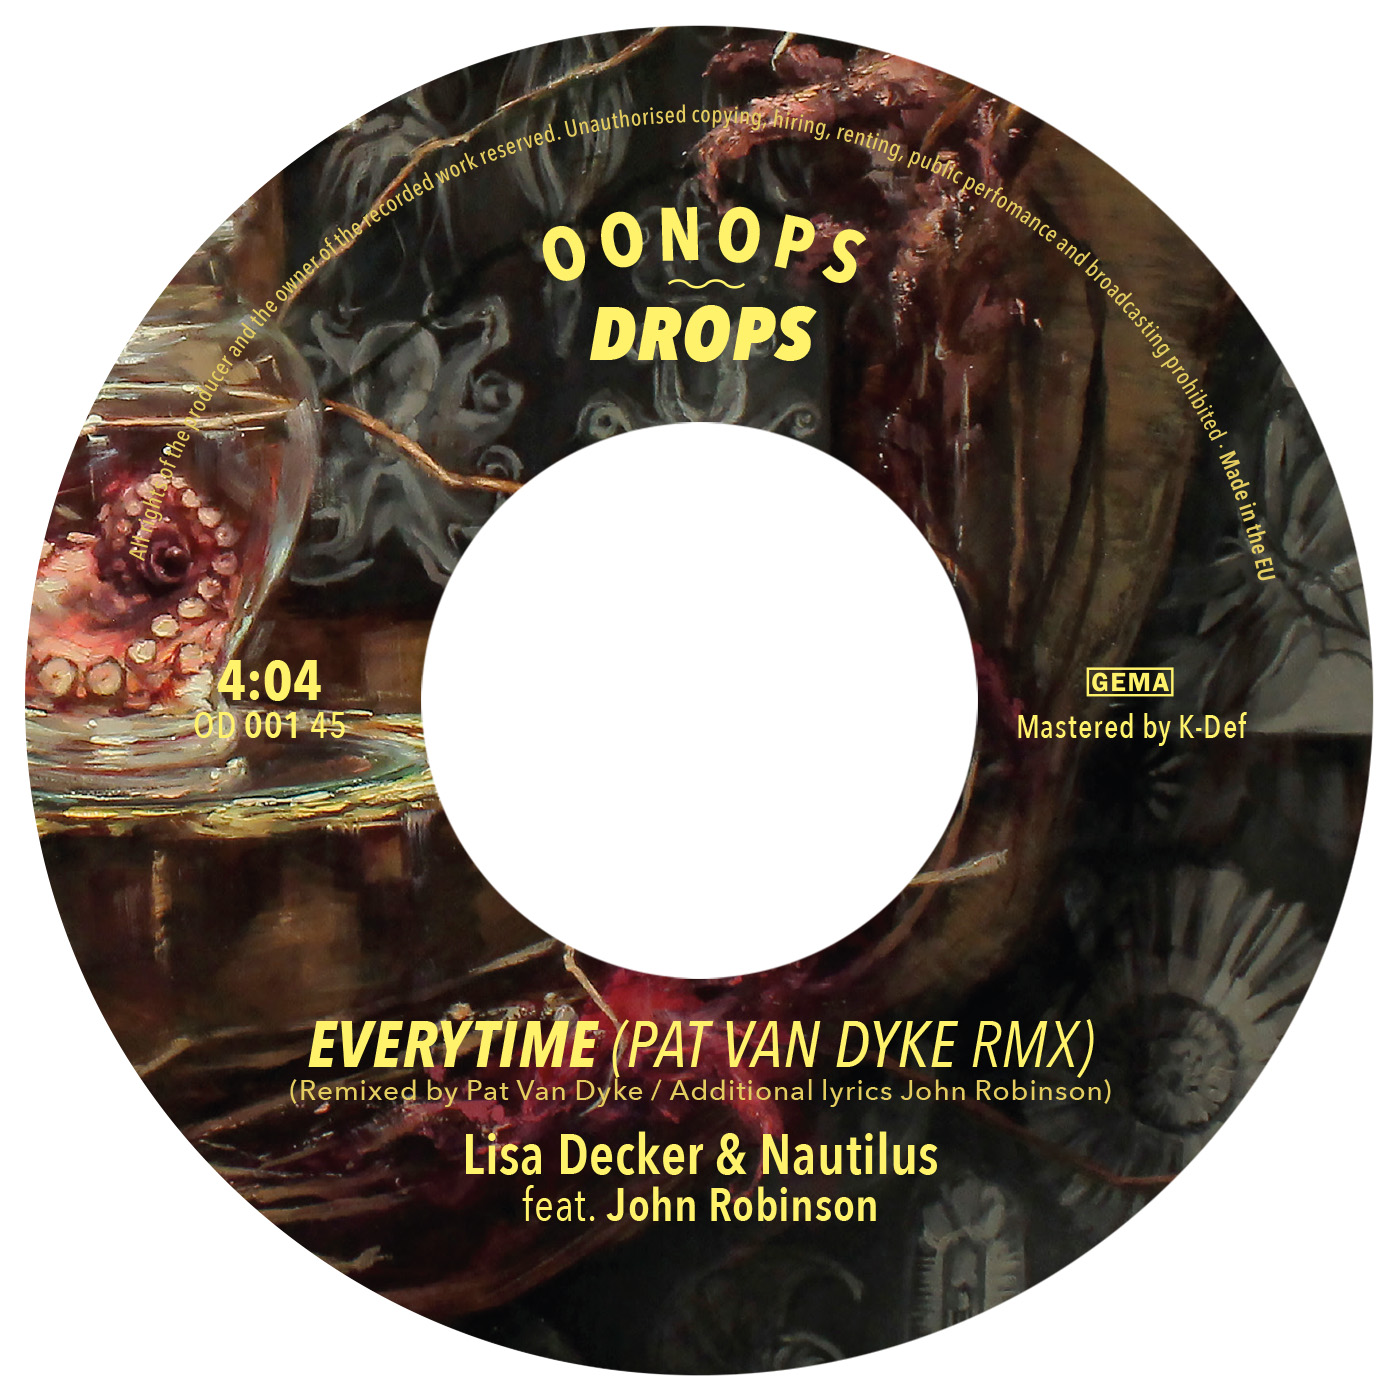 Lisa Decker & Nautilus – Everytime (Pat Van Dyke Remix feat. John Robinson)